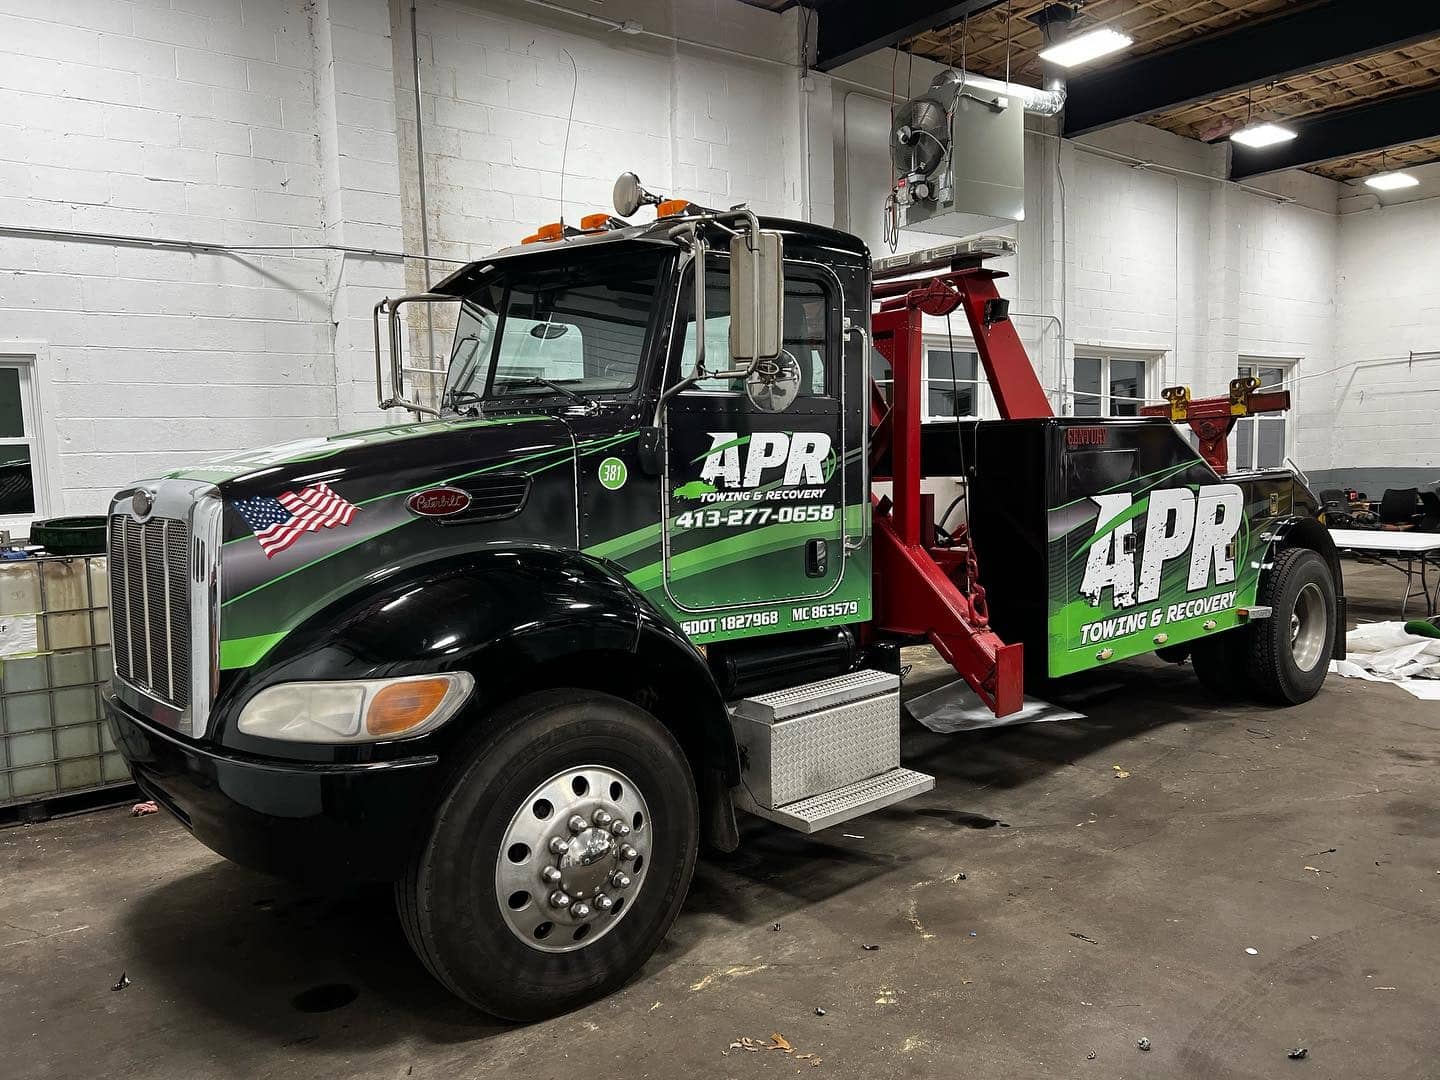 APR Towing & Recovery Ware, Sturbridge, Massachusetts 6